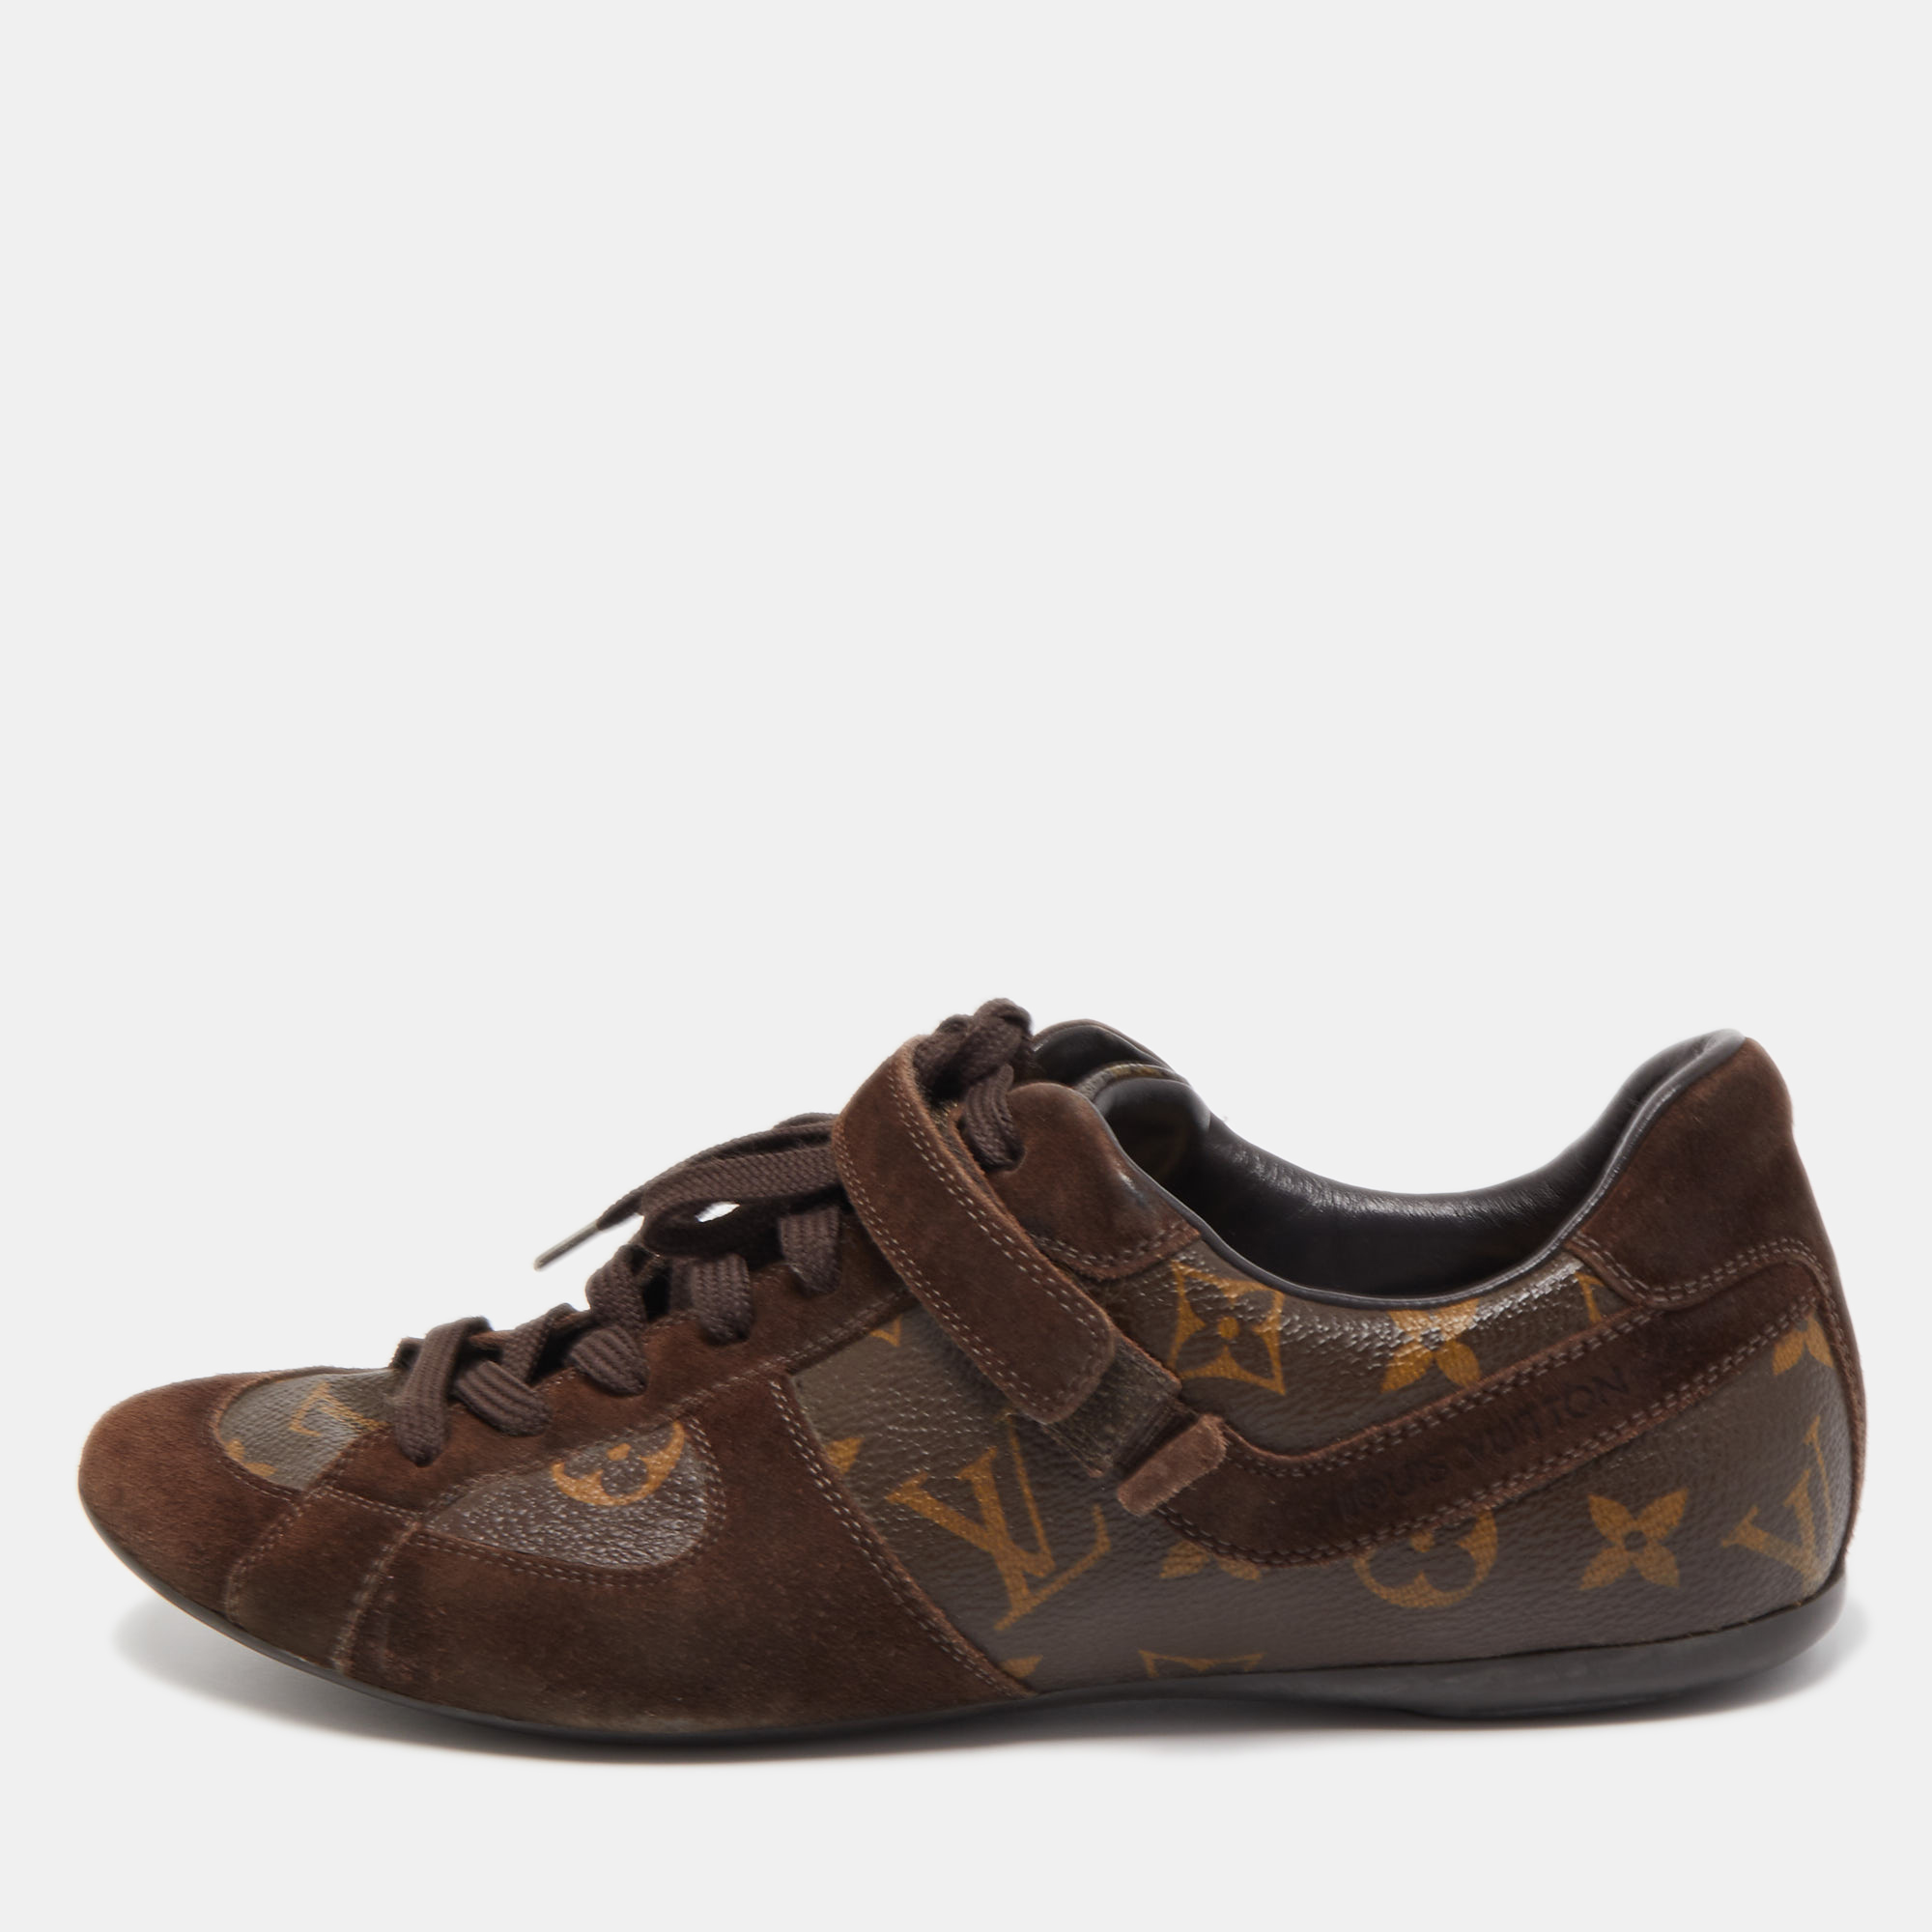 Louis Vuitton Monogram Match-Up Sneaker Grey/White US size 10